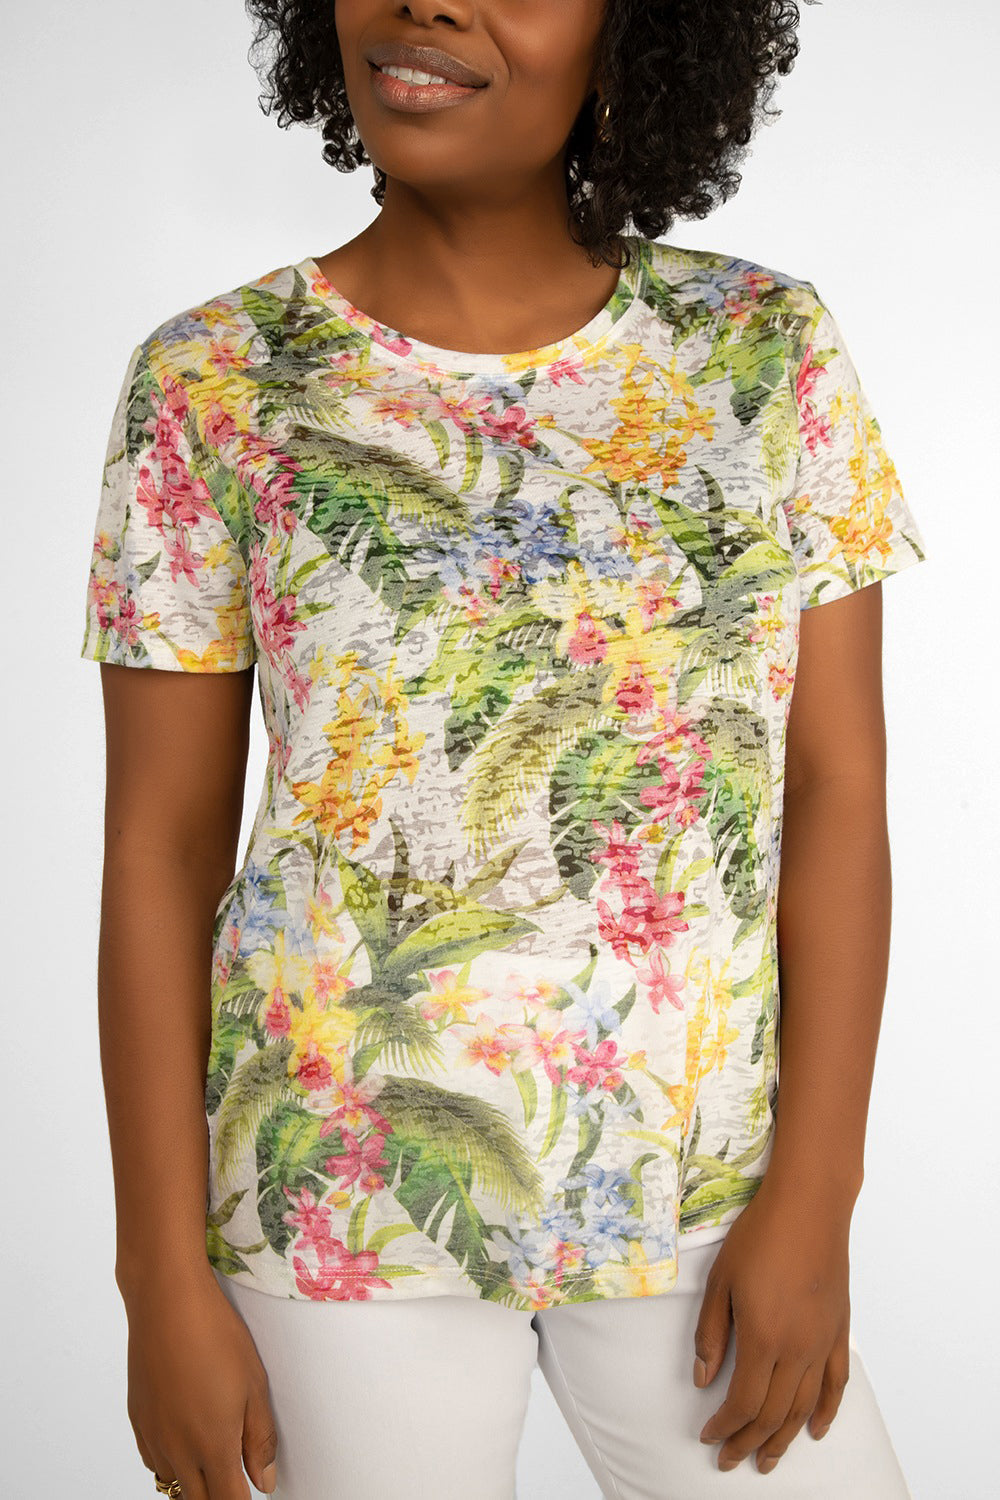 Carre Noir (6967) women's Short Sleeve Tropical Floral Printed T-shirt